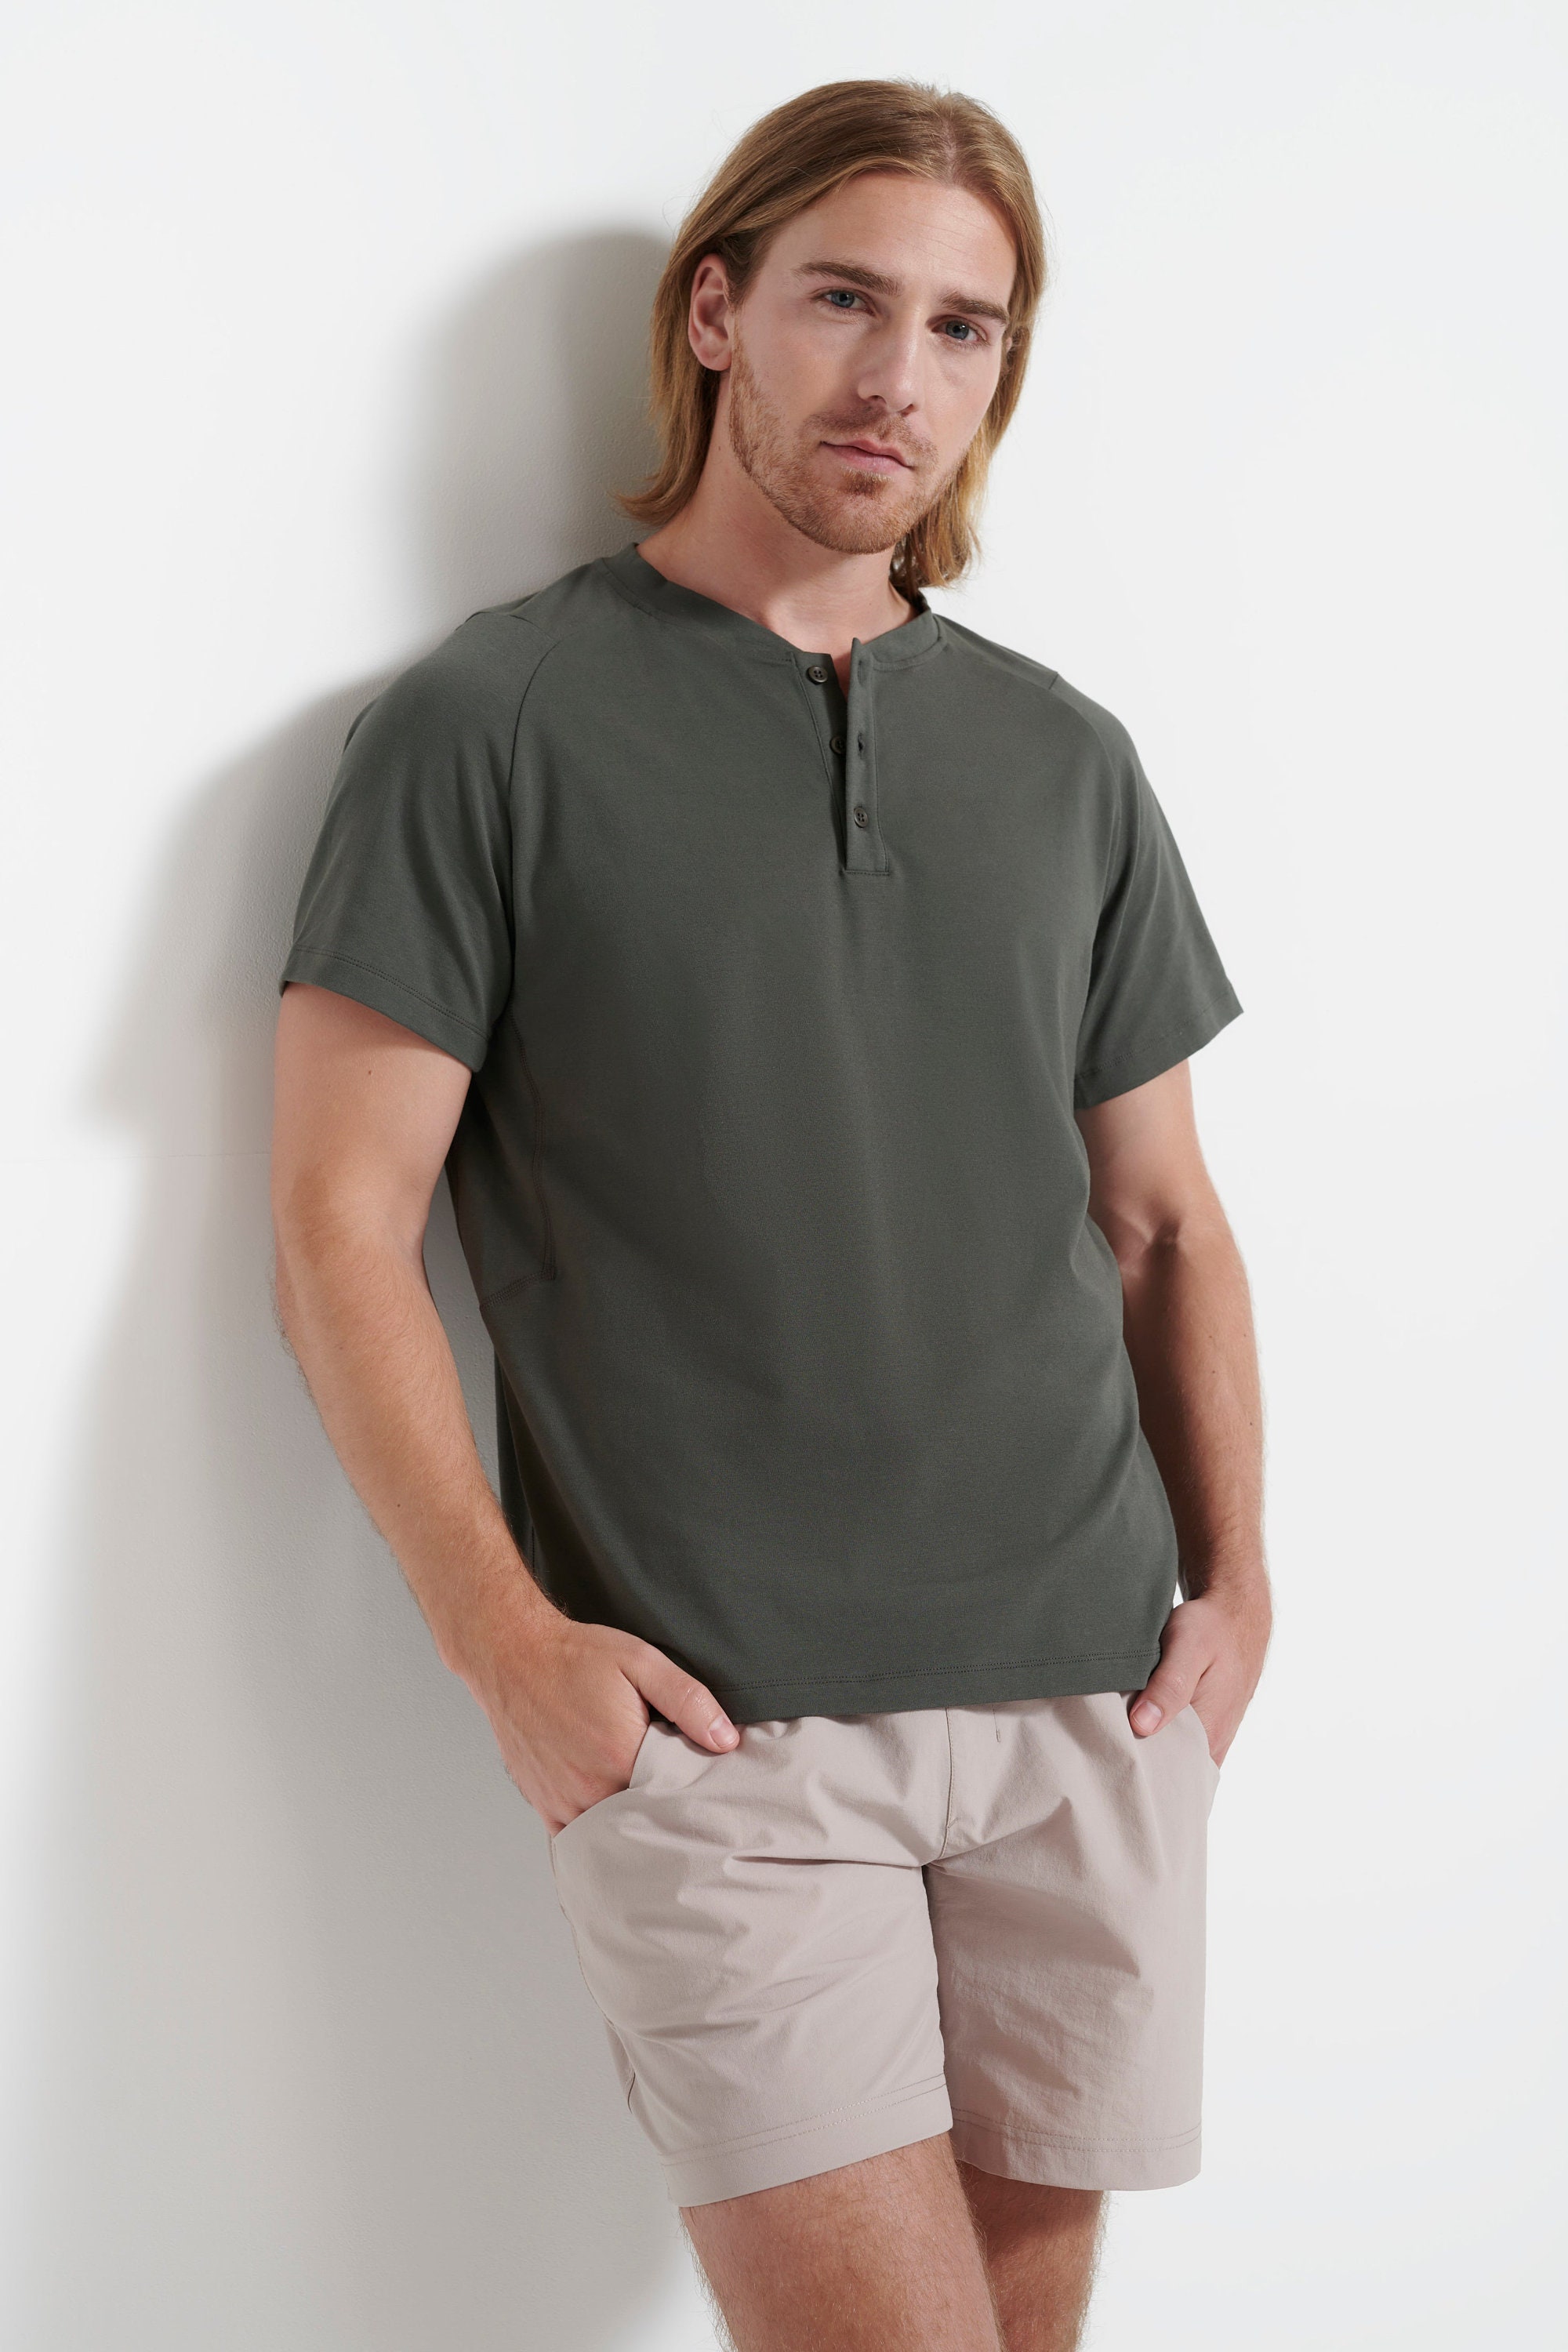  True Classic Long Sleeve Henley Shirt for Men. Premium